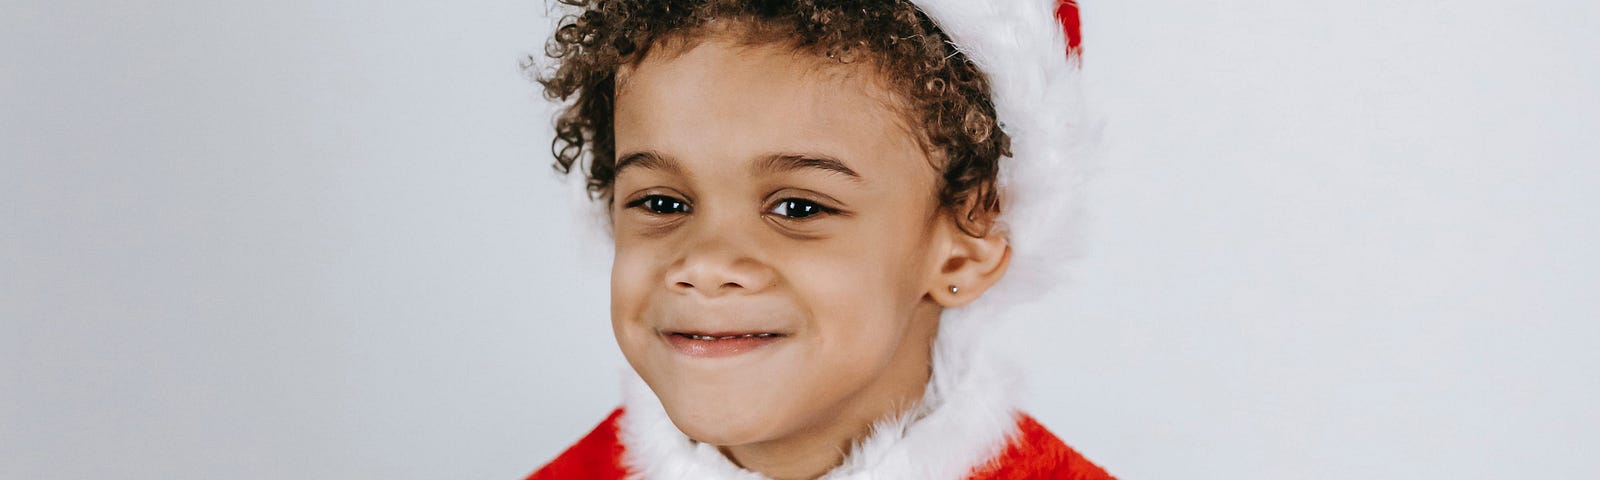 Kid wearing a Santa costume